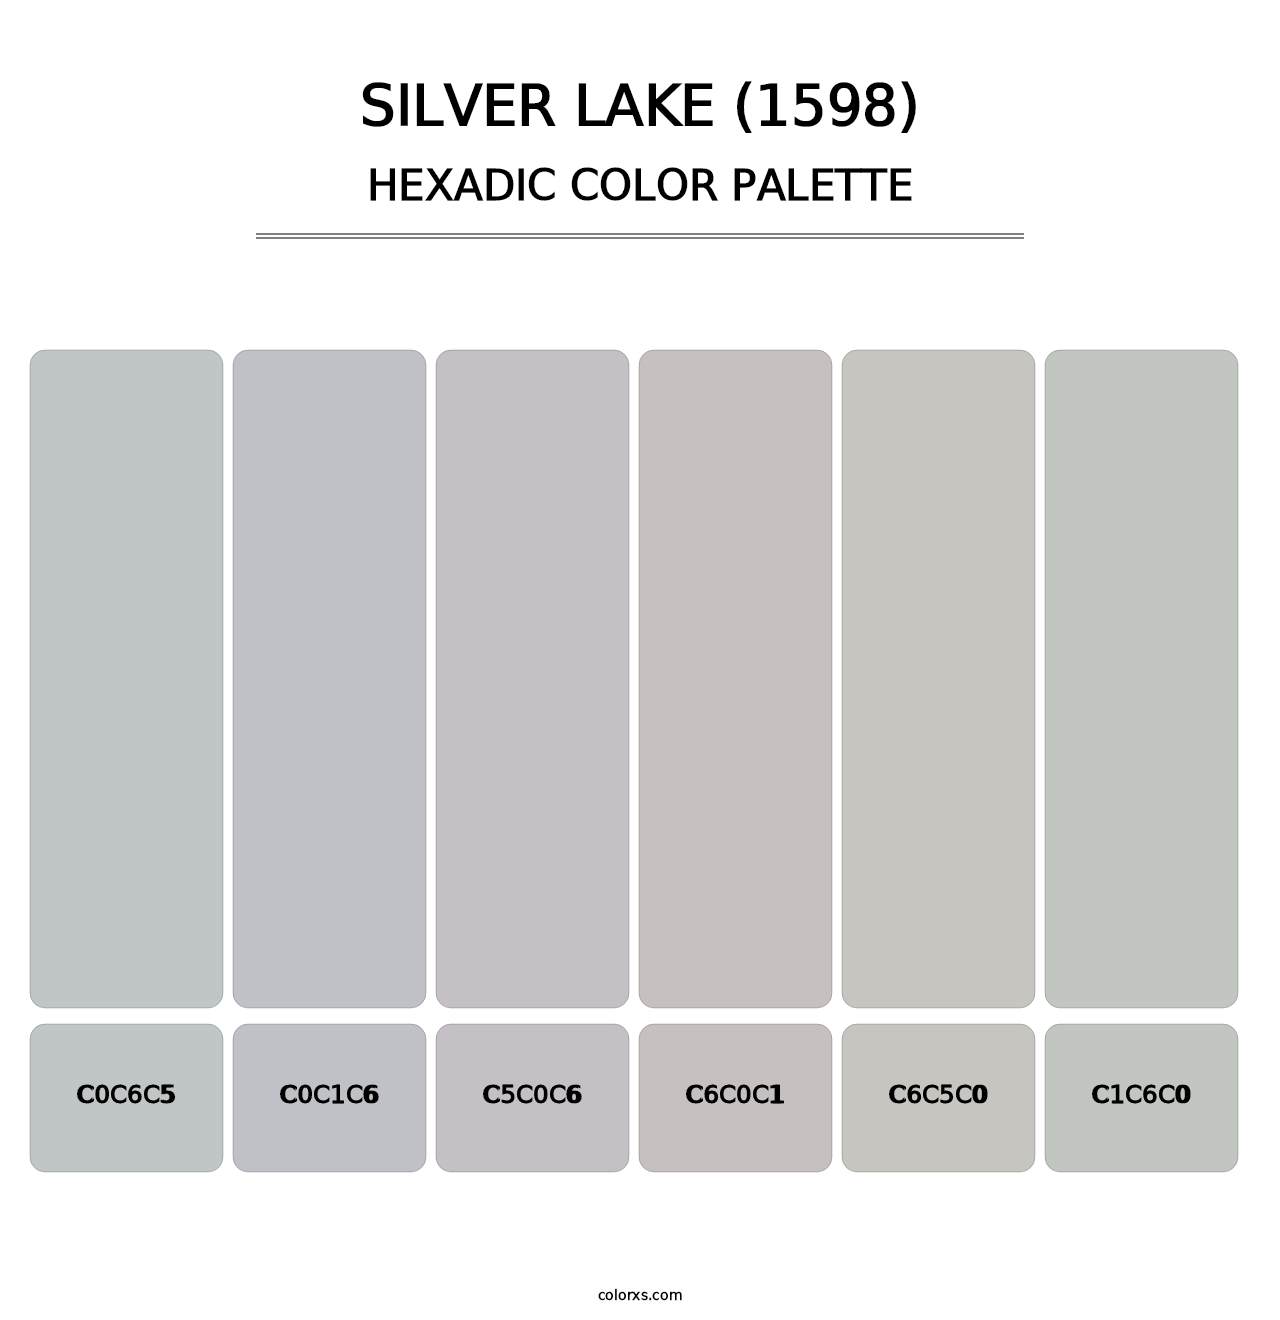 Silver Lake (1598) - Hexadic Color Palette